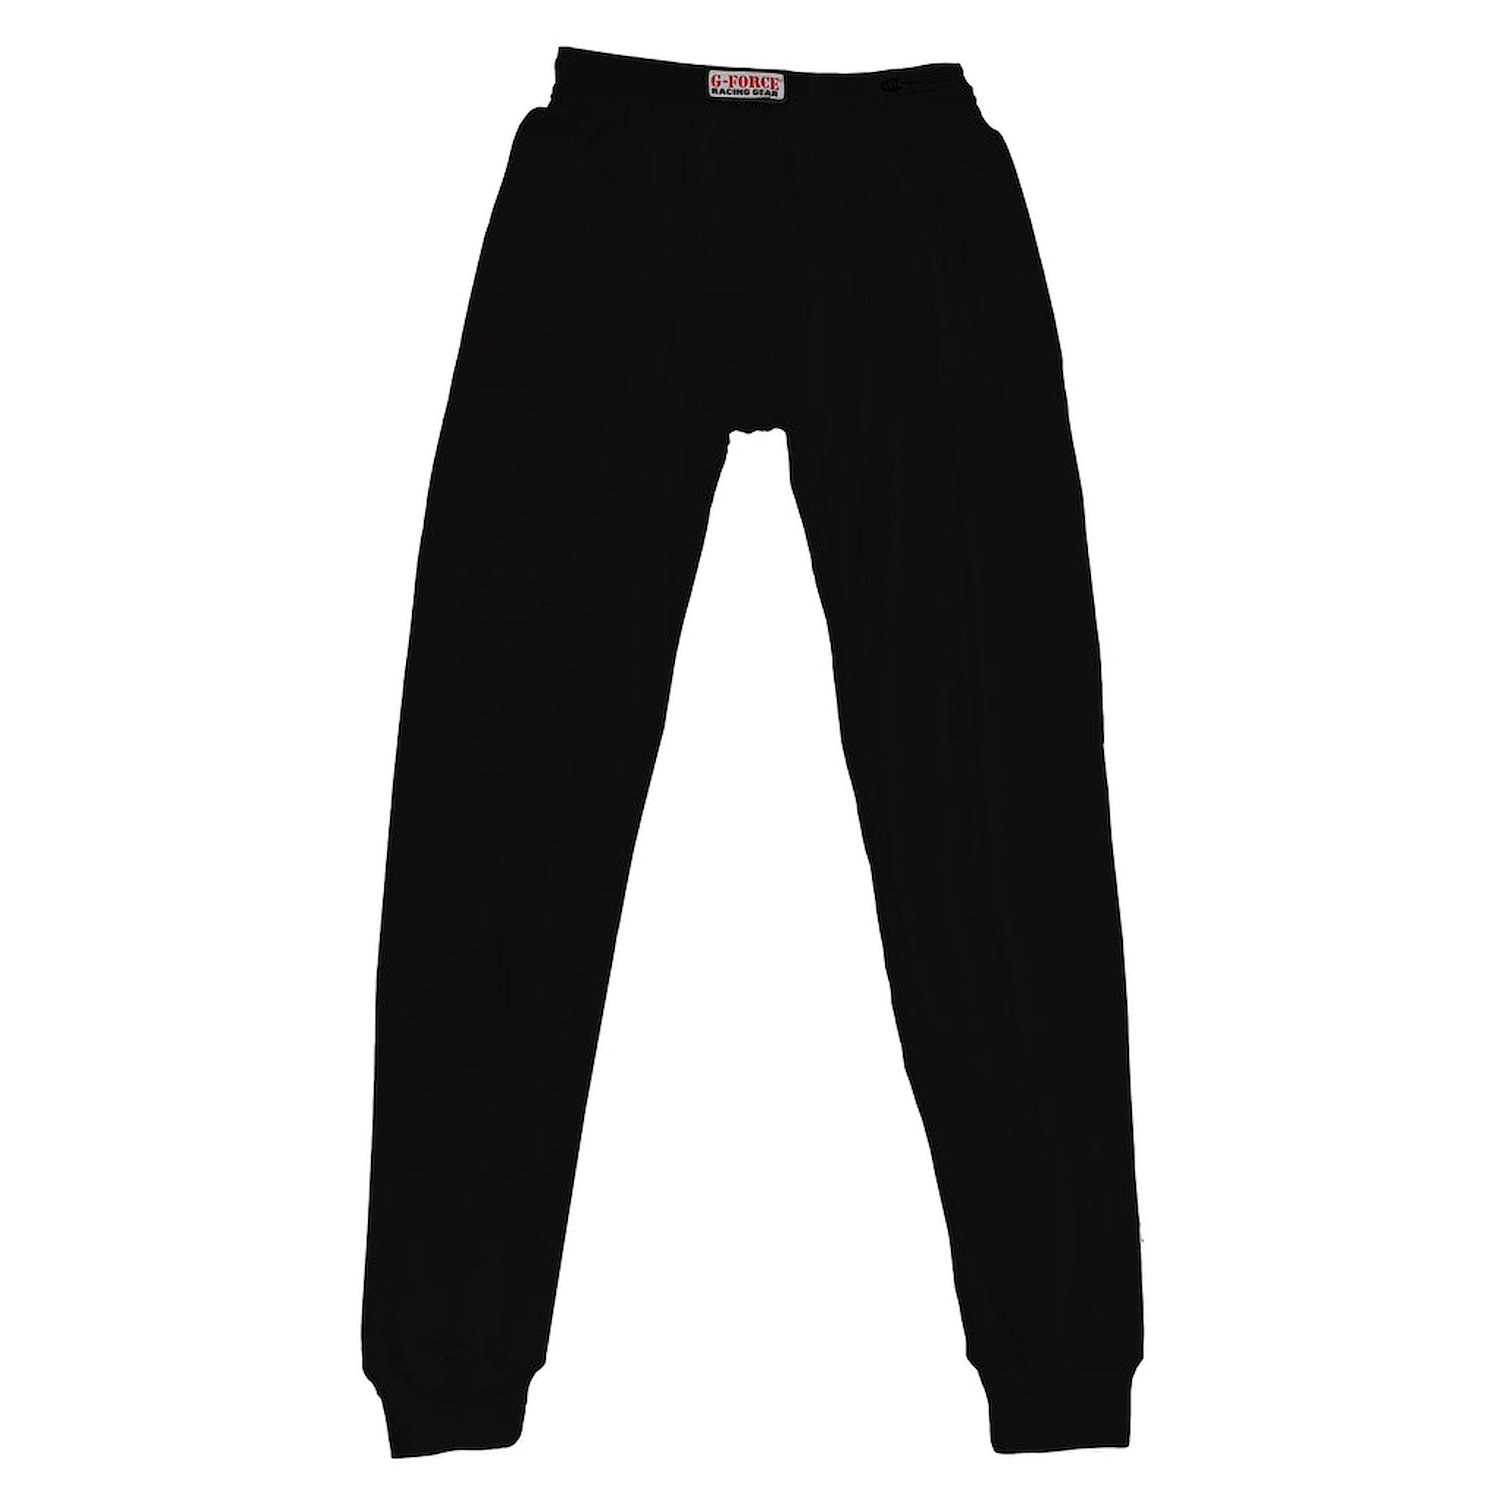 4161LRGBK Underwear Pants, Large, Black